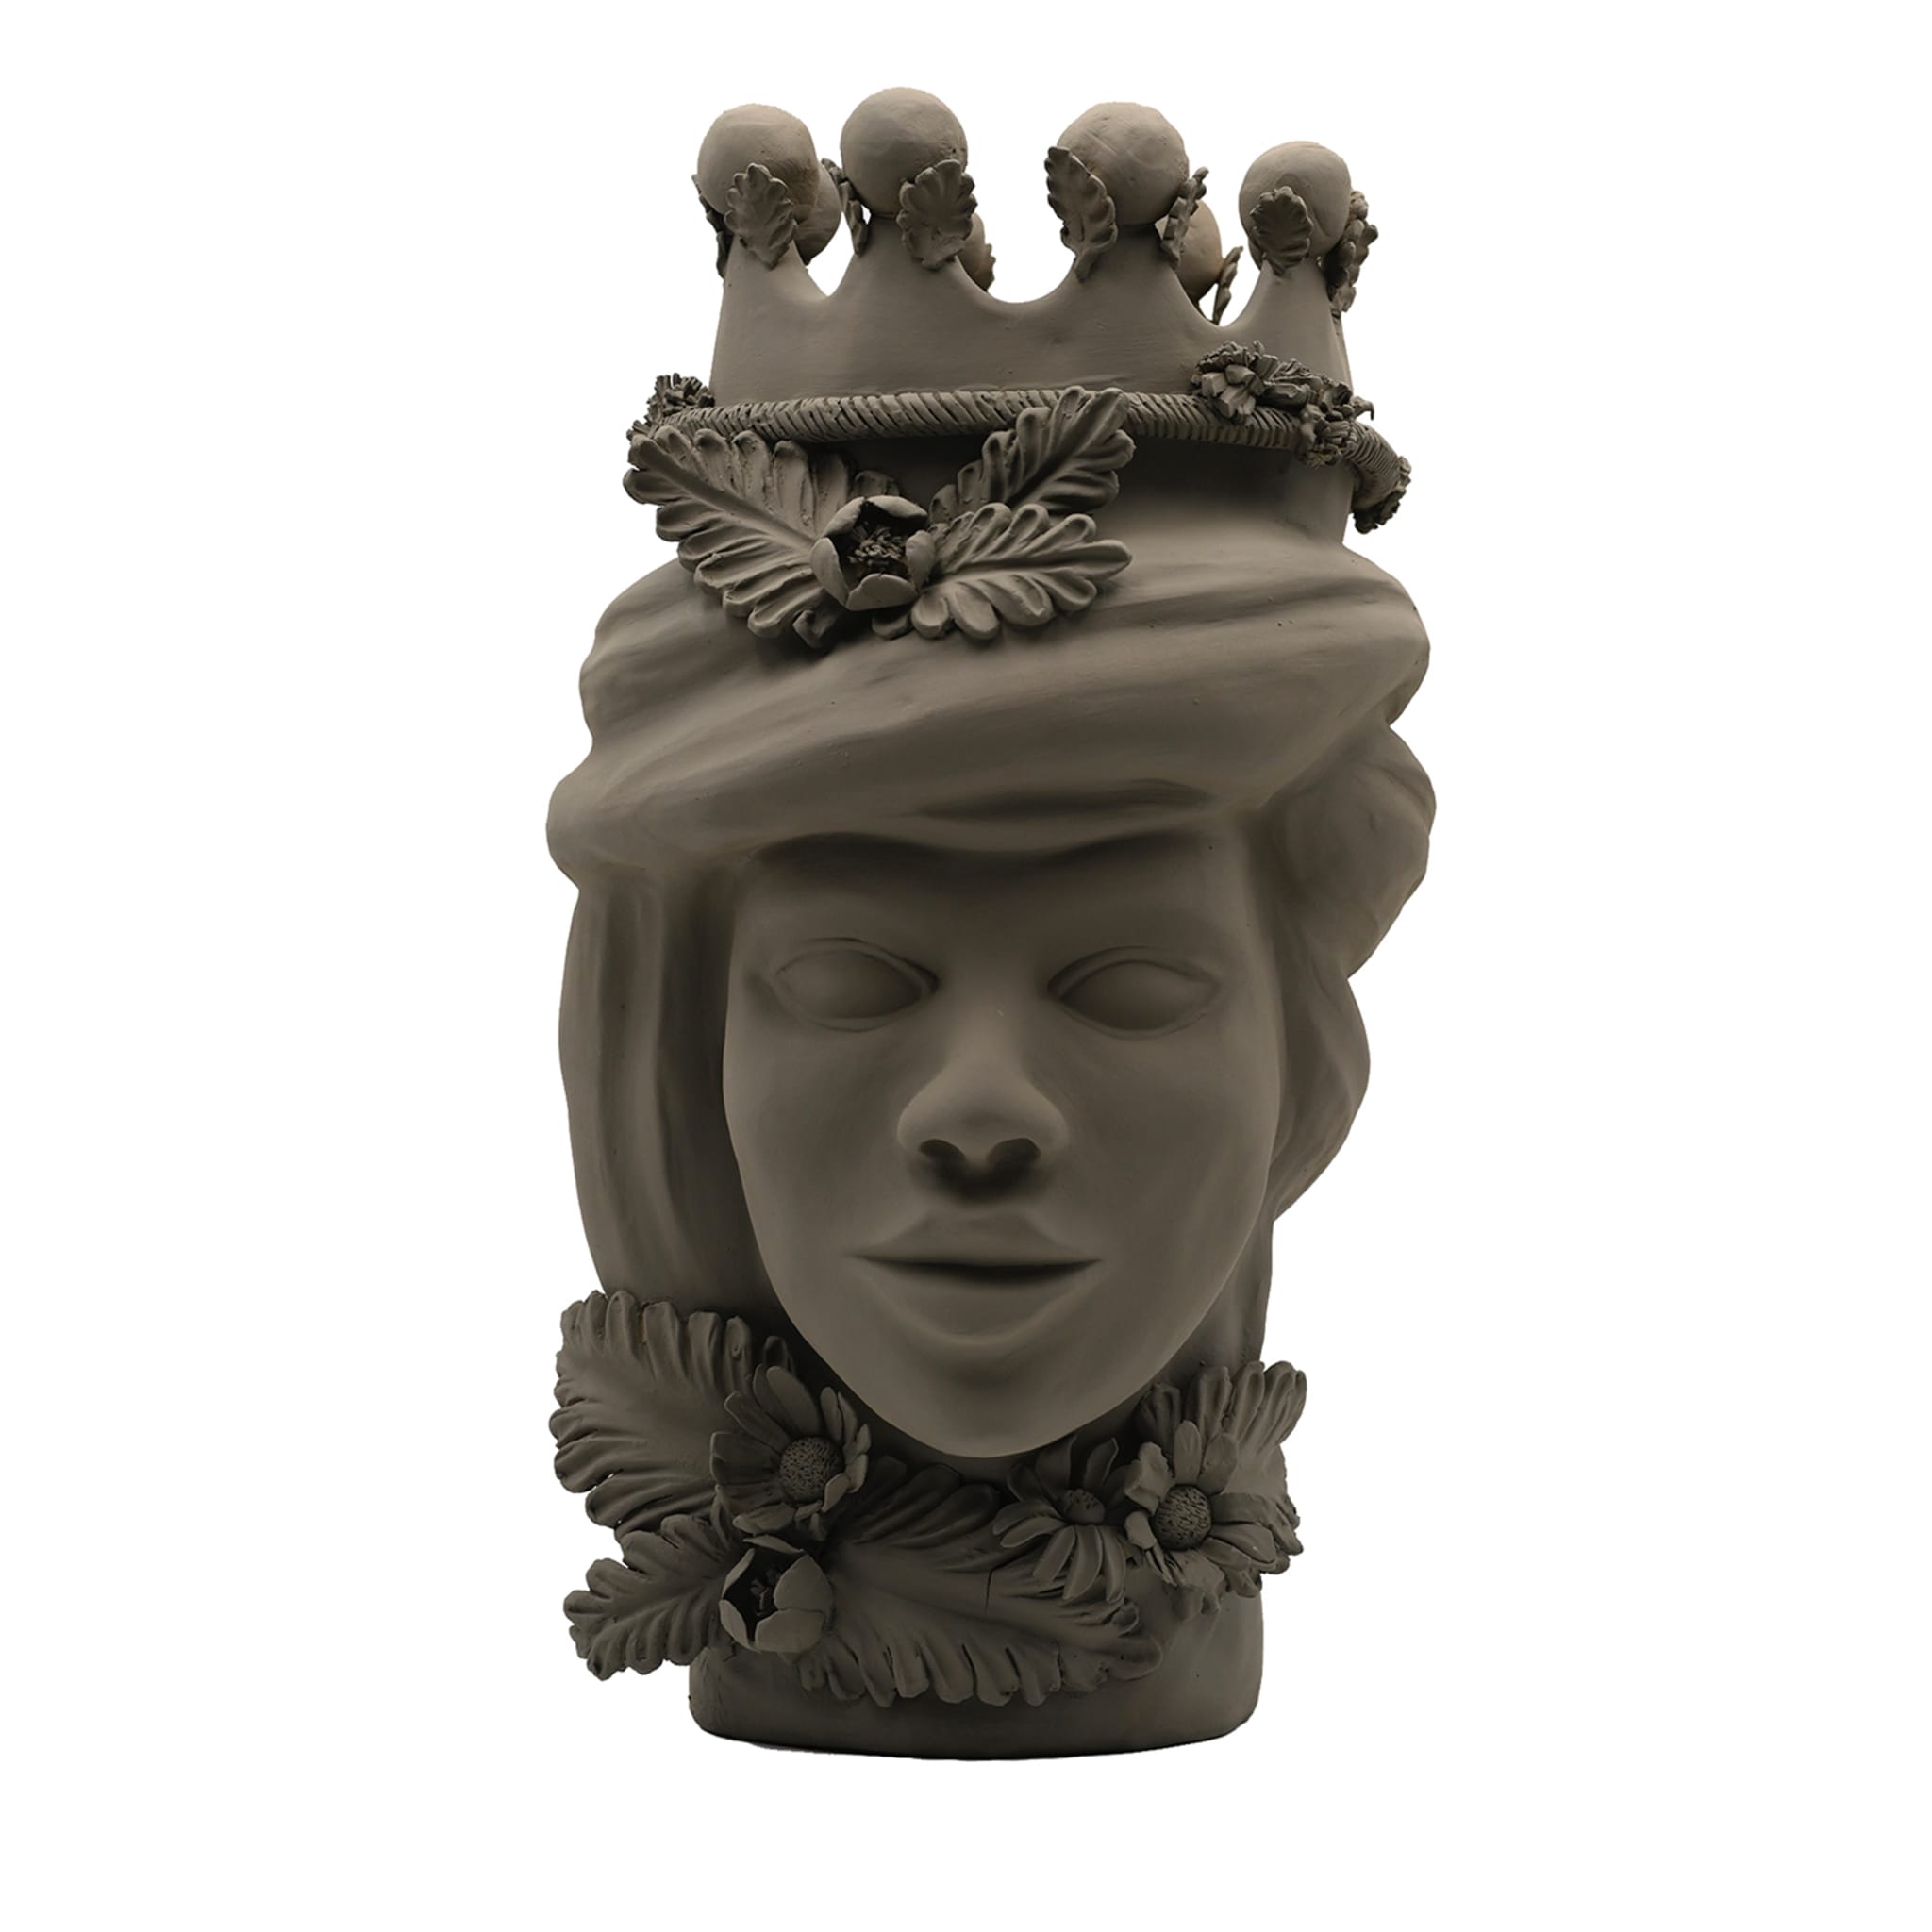 Unique Italian Moor's Head Sculpture